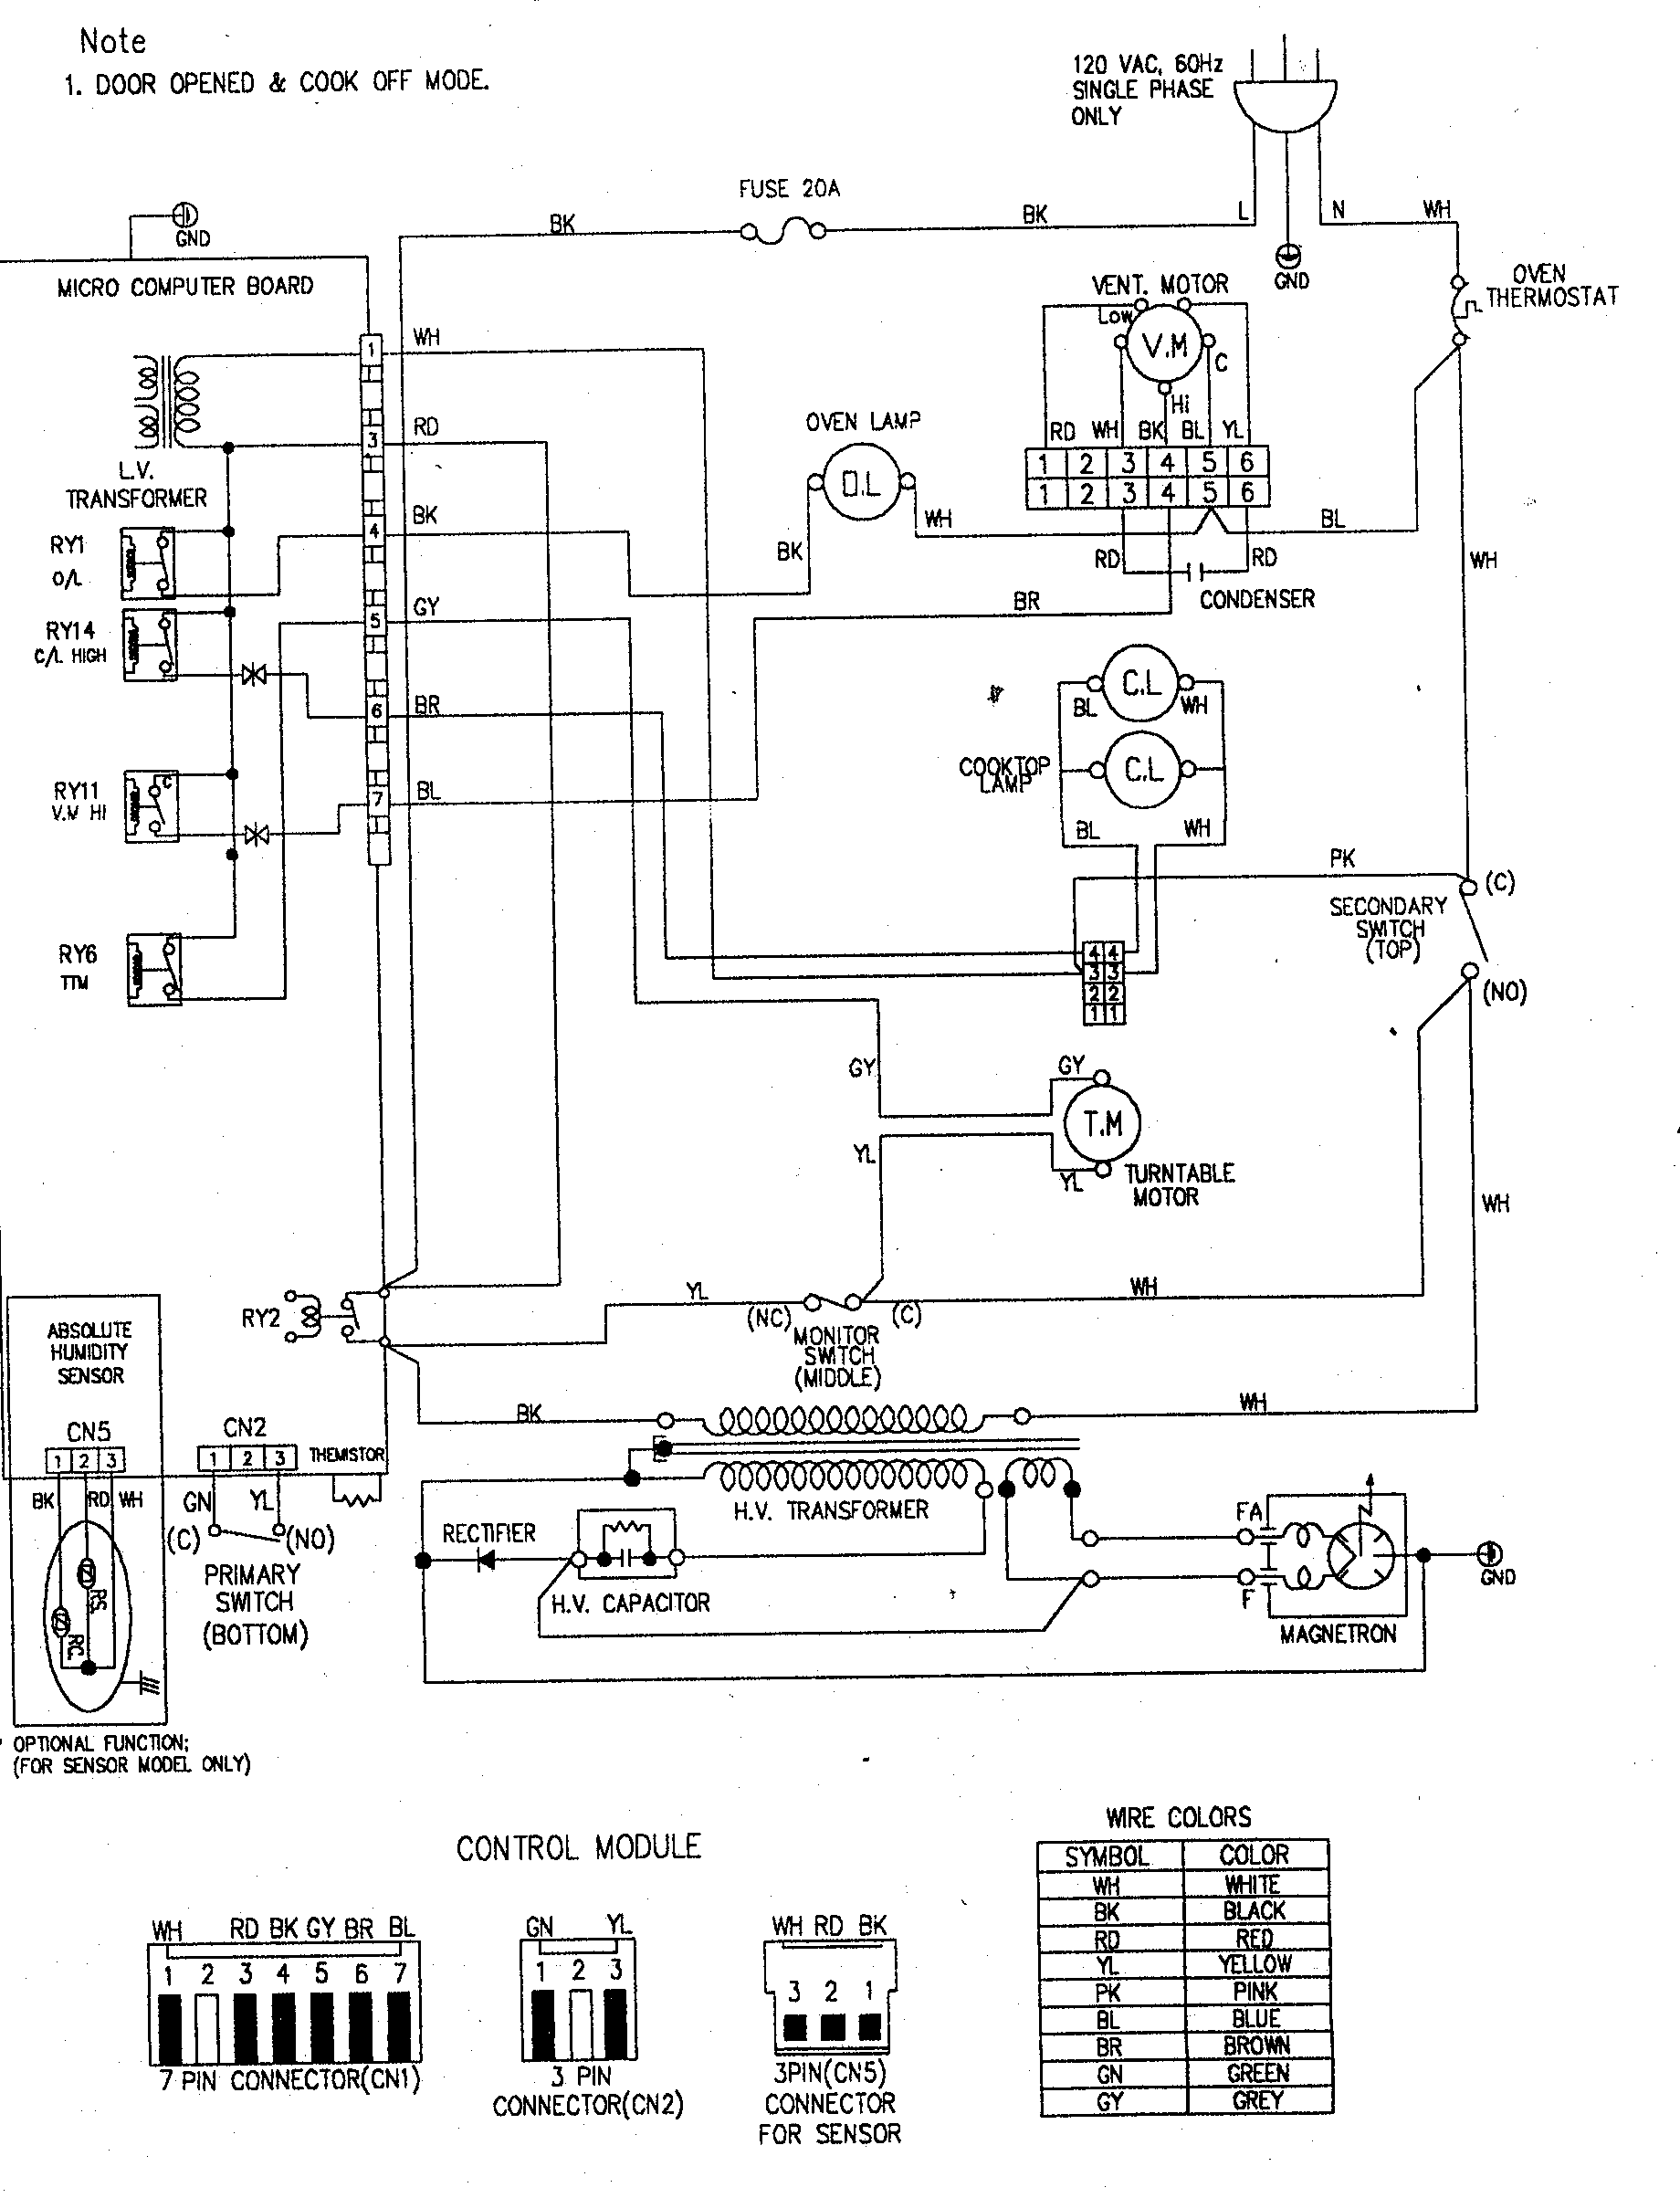 wfe515s0es0 wiring diagram